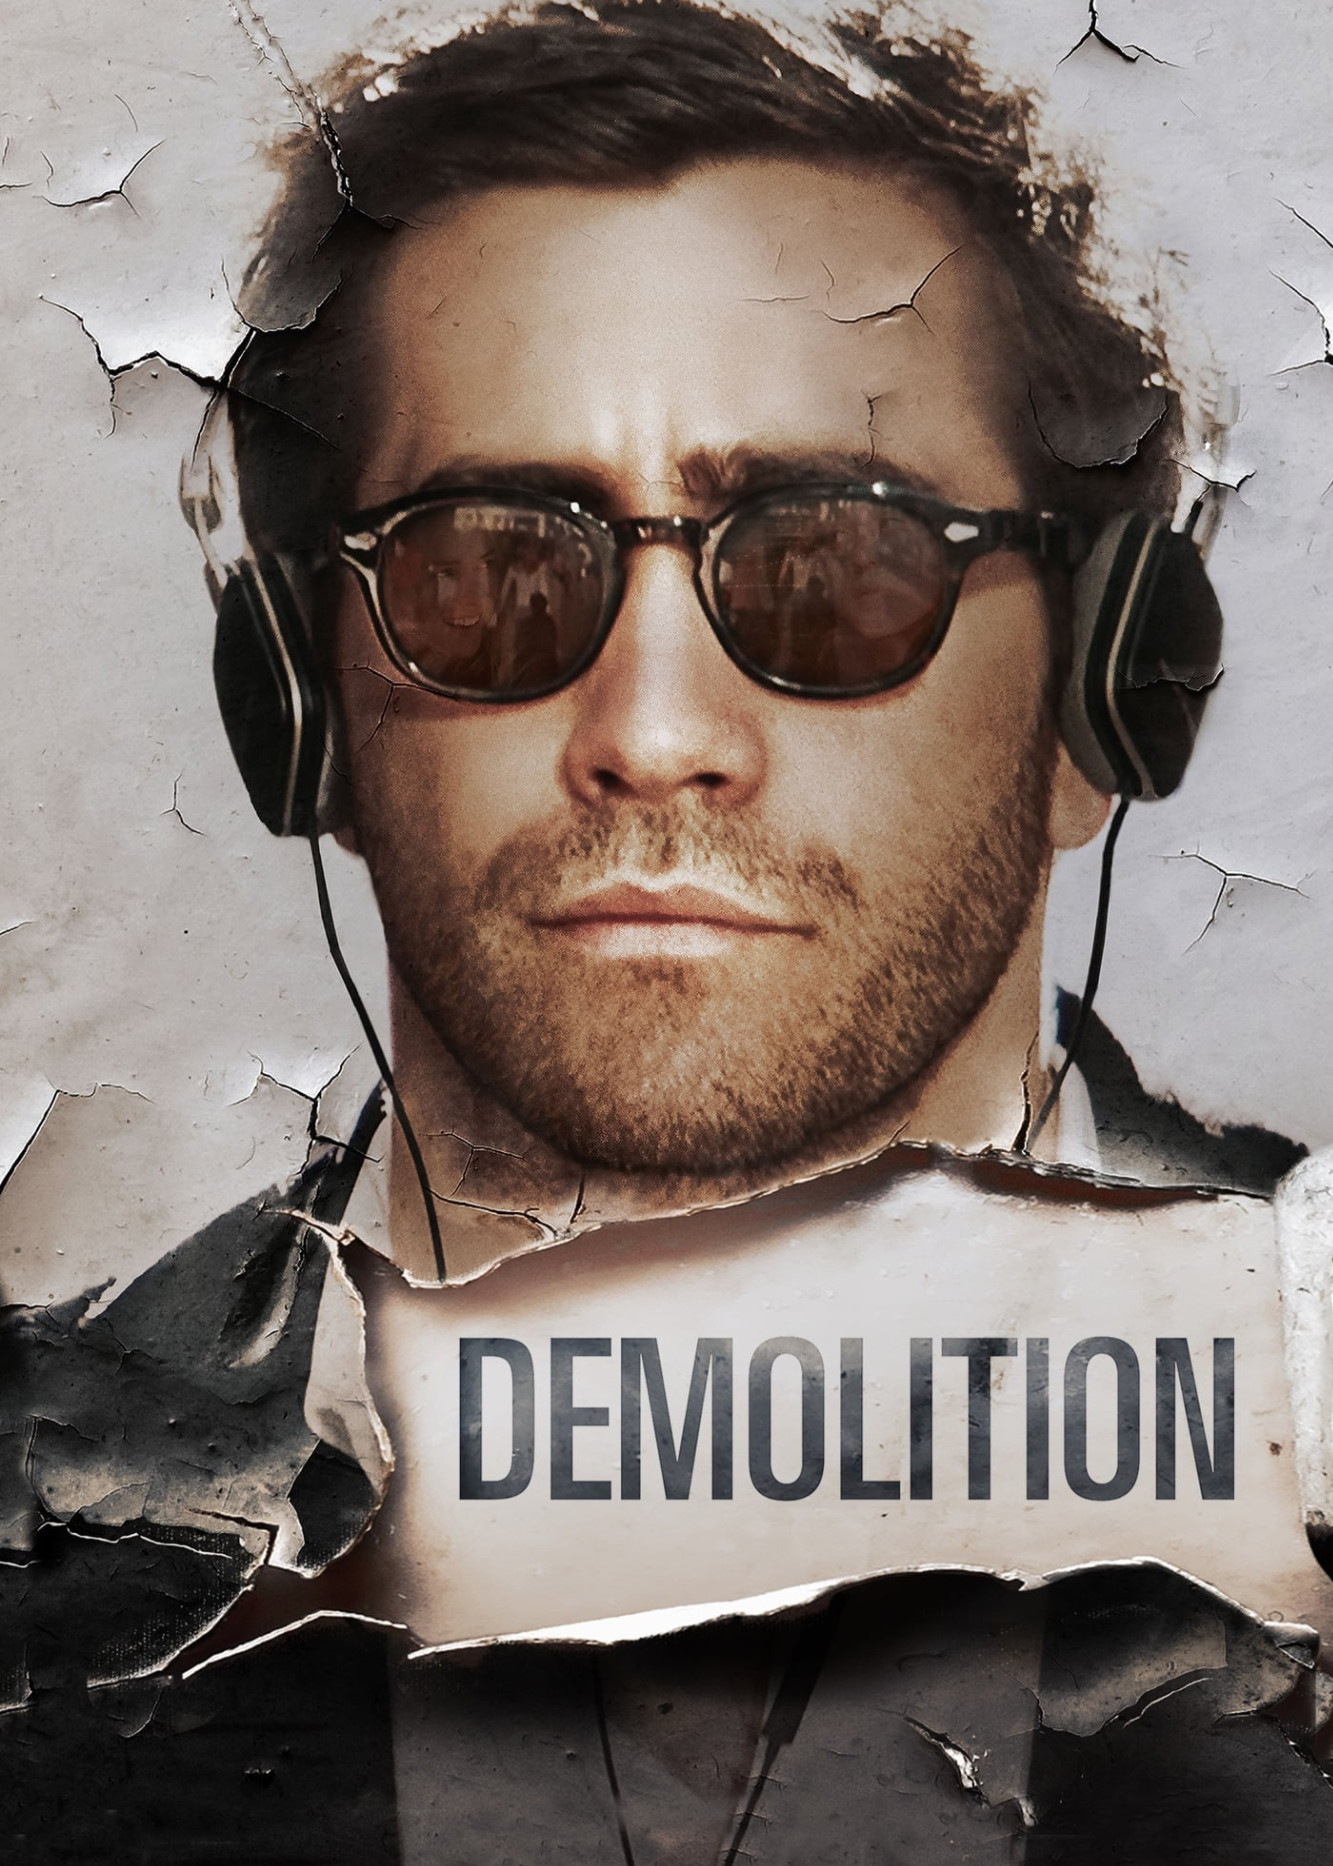 Demolition (Demolition) [2015]